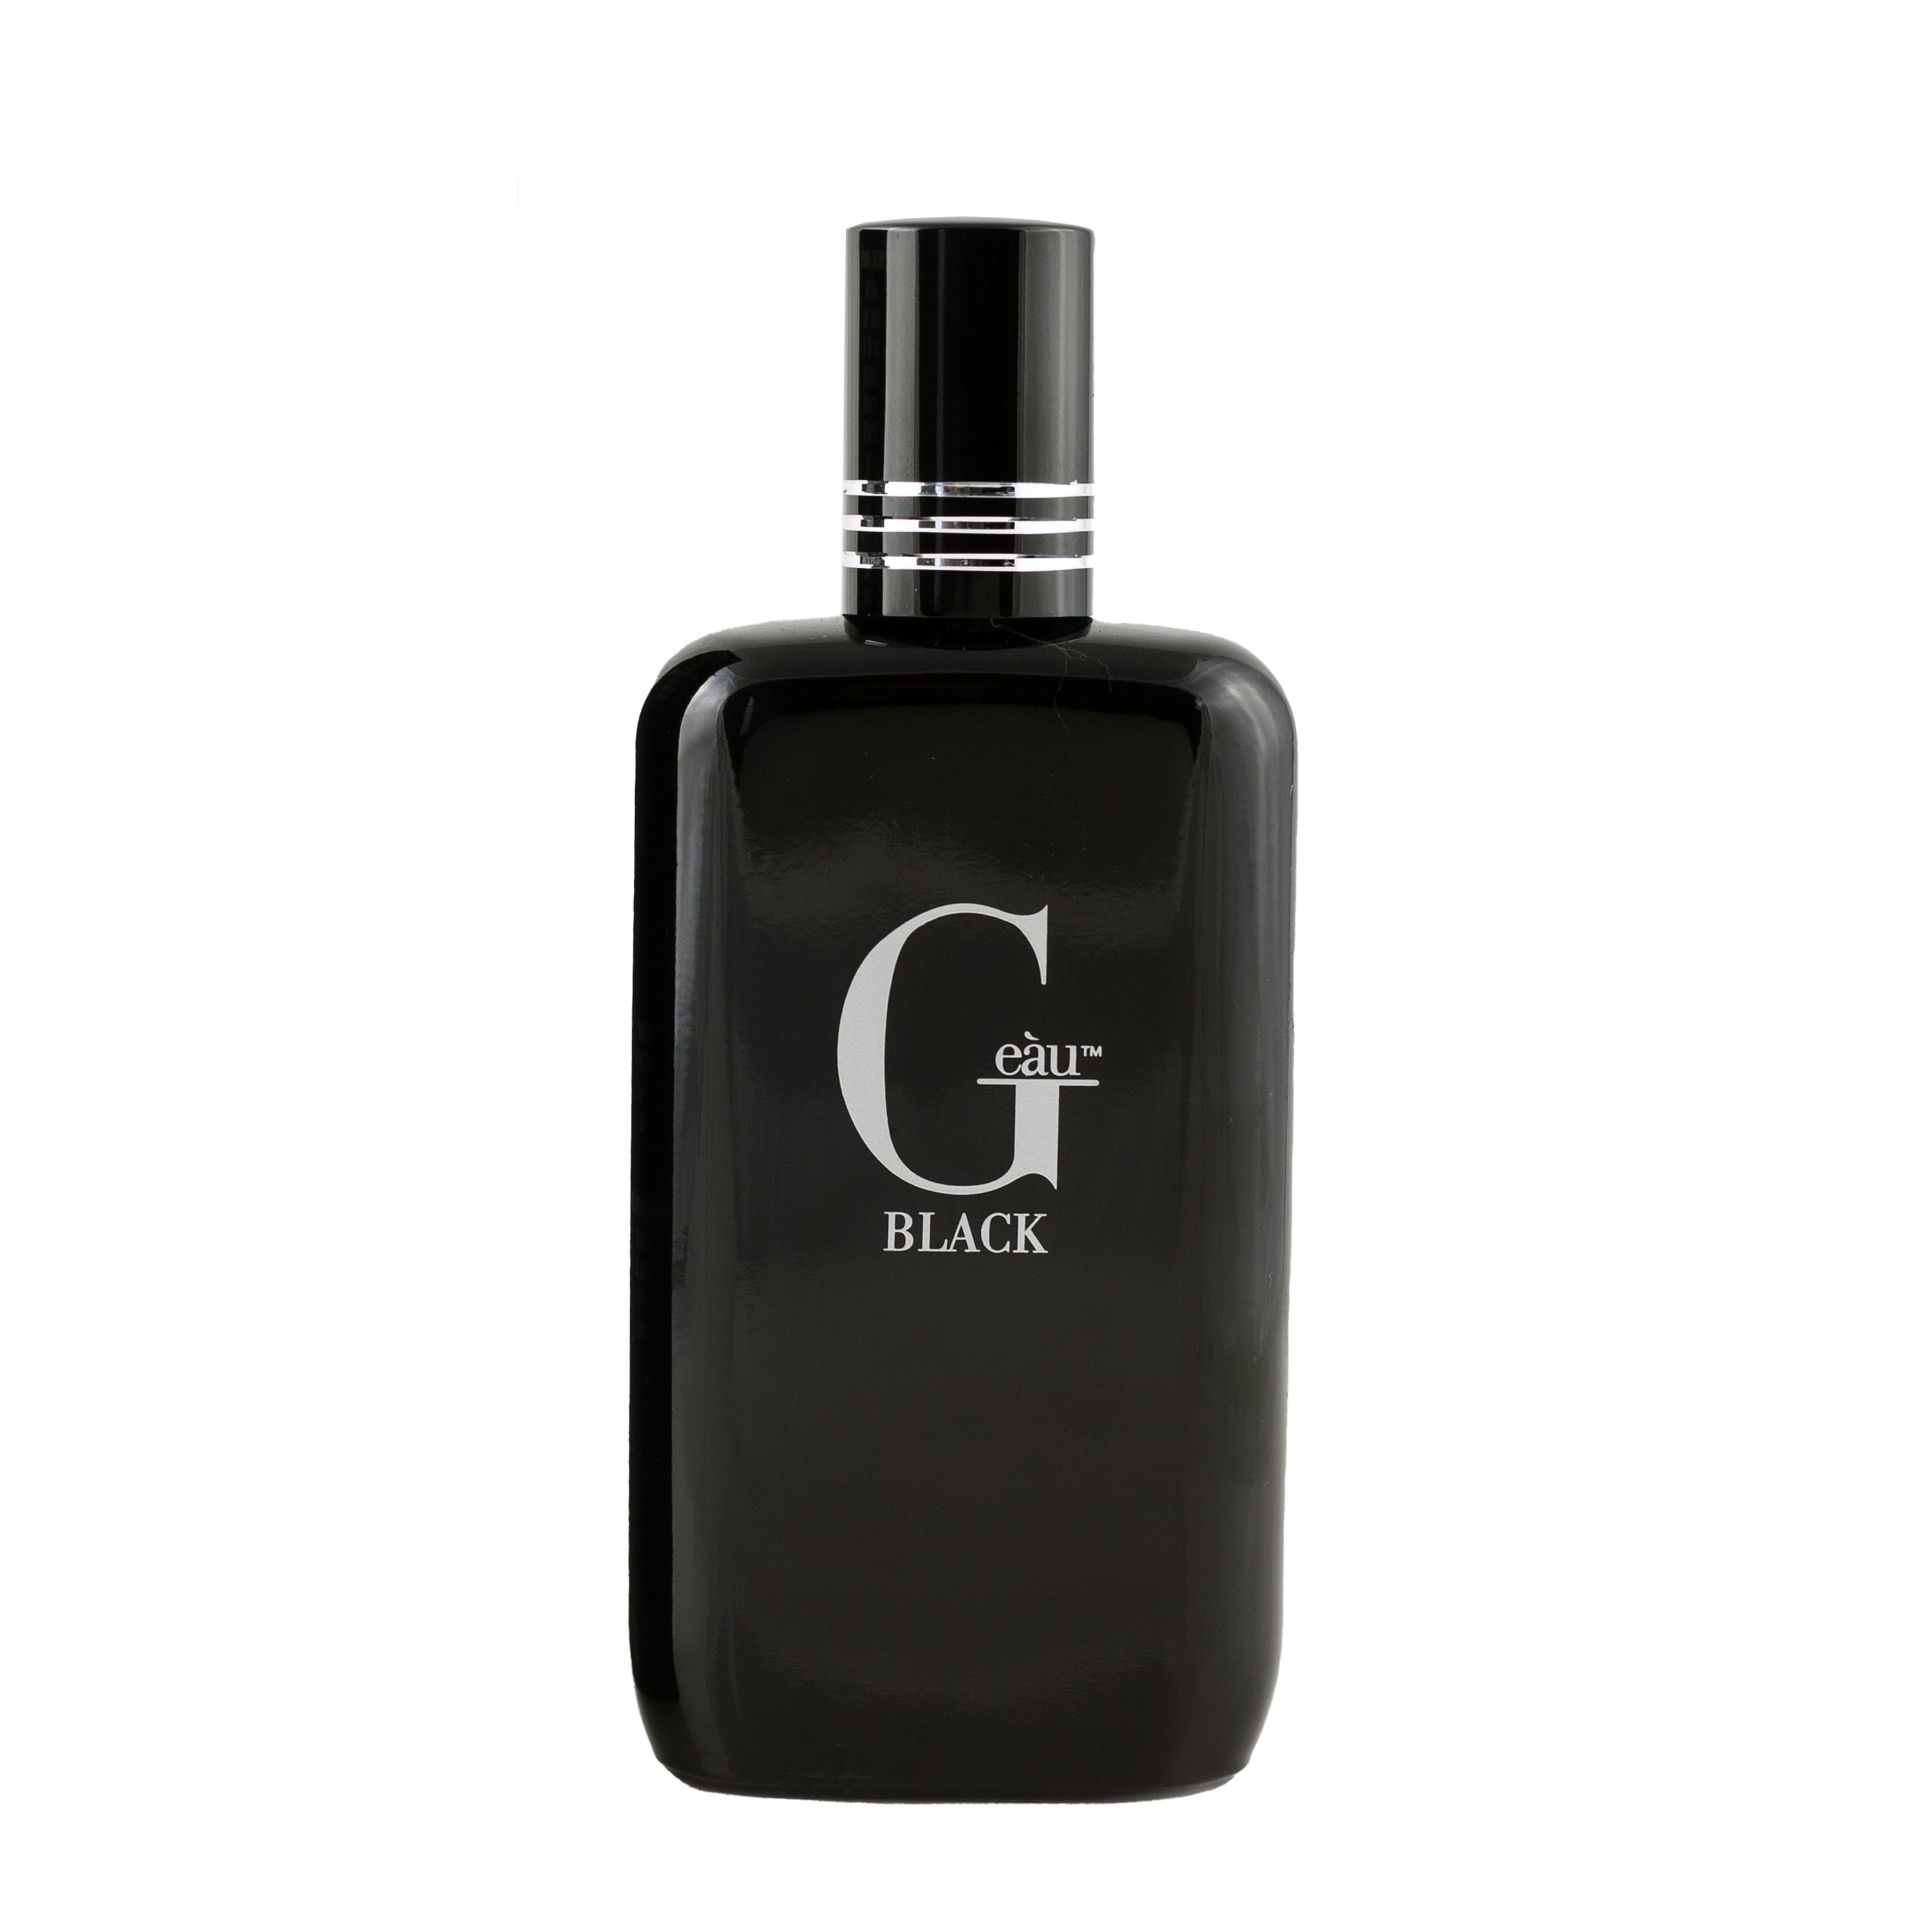 PB ParfumsBelcam G Eau Black Version of 